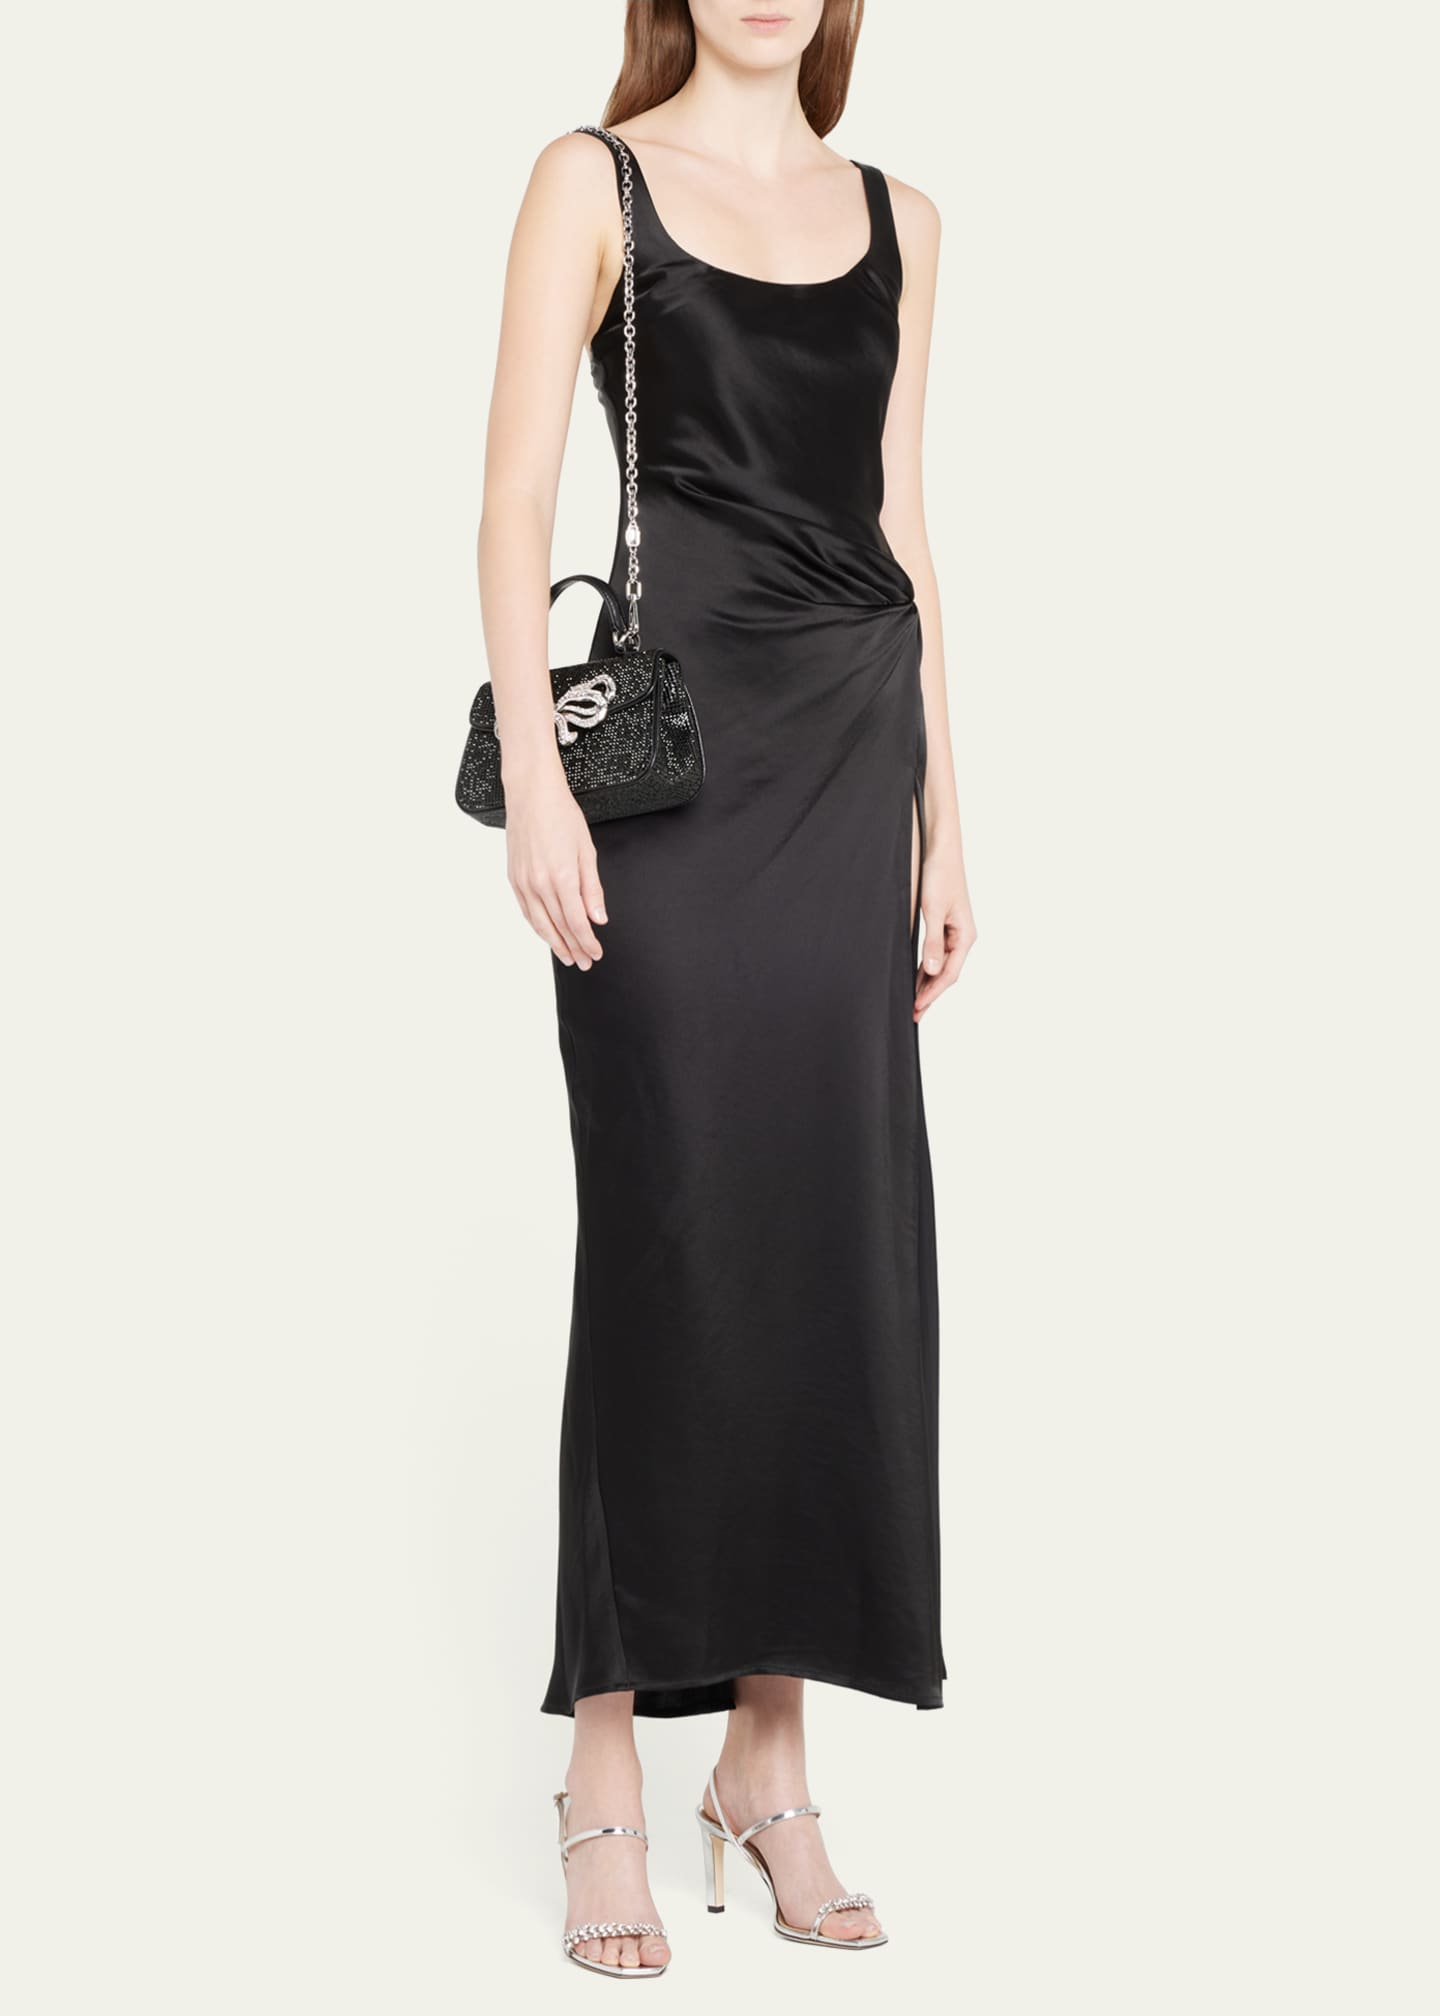 Judith Leiber Couture Bow Crystal Top-Handle Bag - Bergdorf Goodman